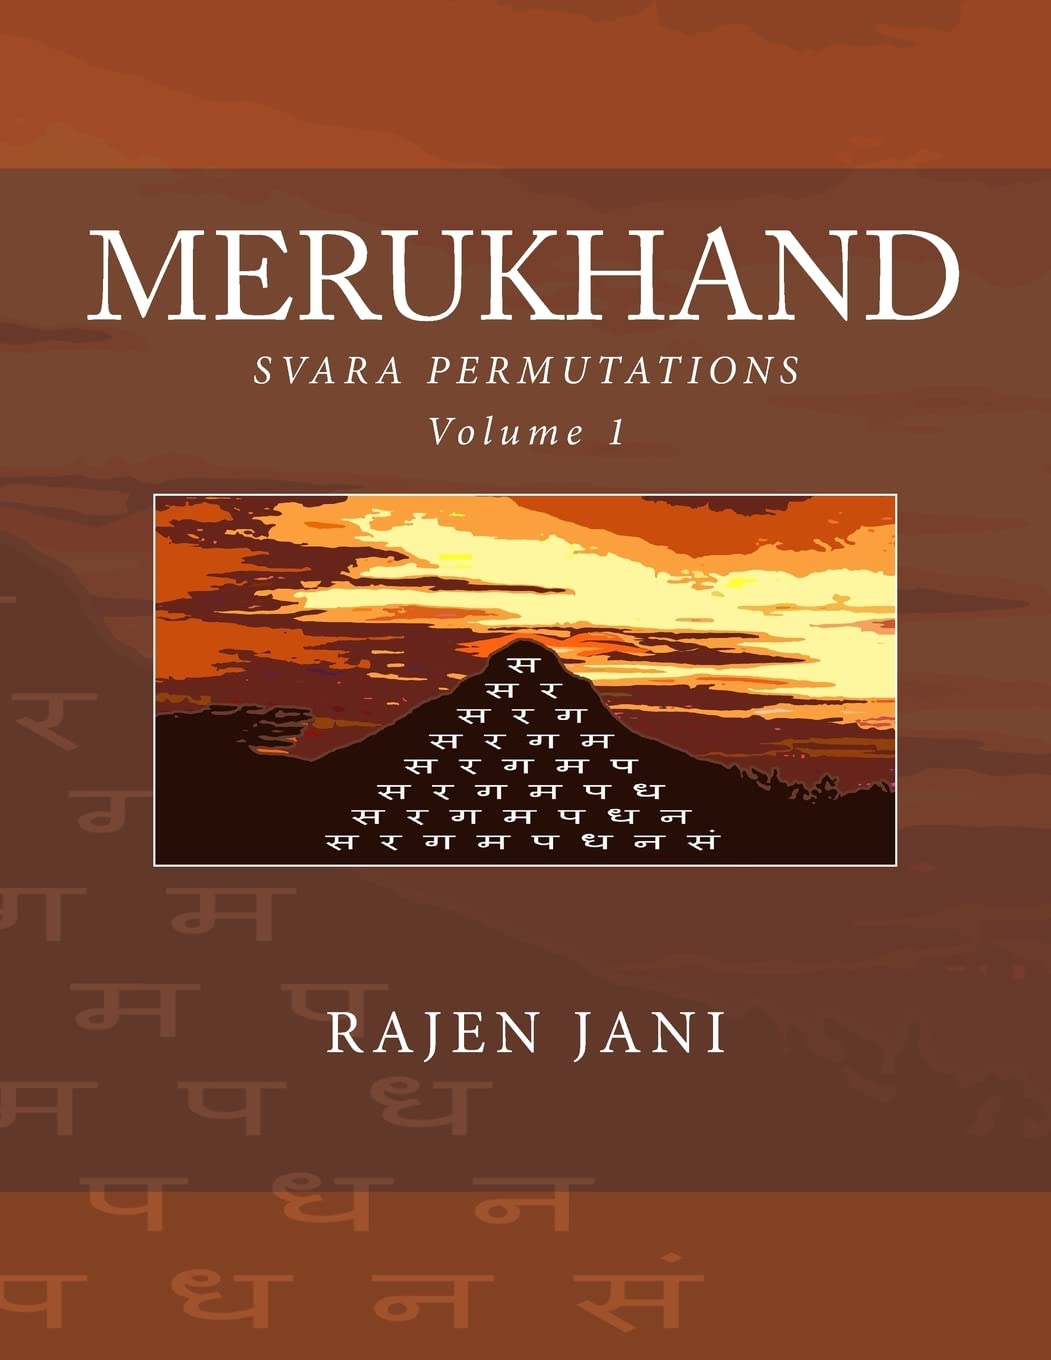 Merukhand: Svara Permutations Volume 1 by Rajen Jani